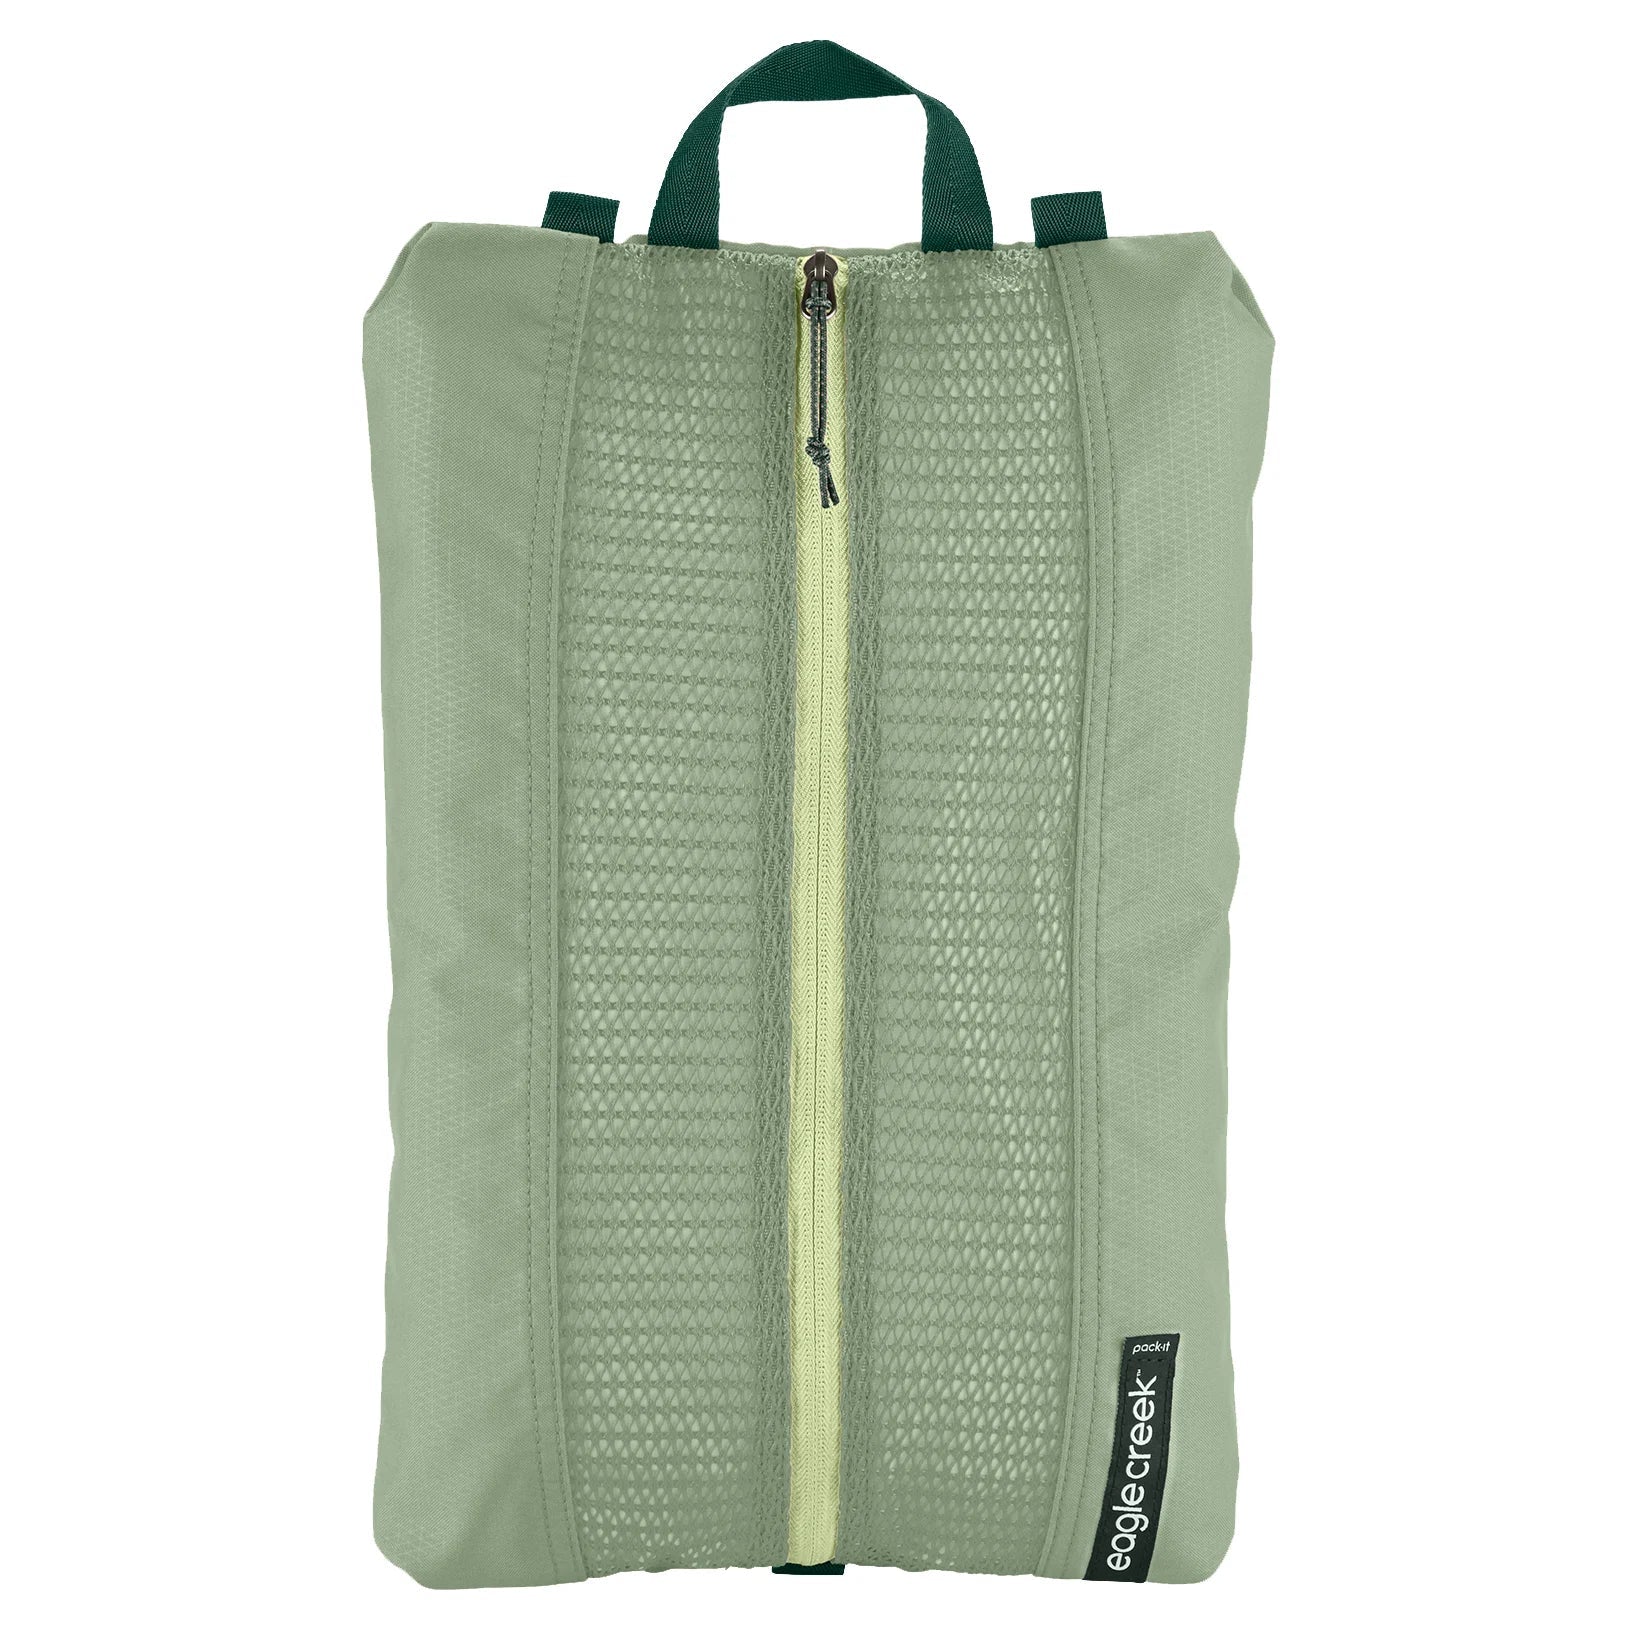 Eagle Creek Pack-It Reveal sac à chaussures 41 cm - vert mousse